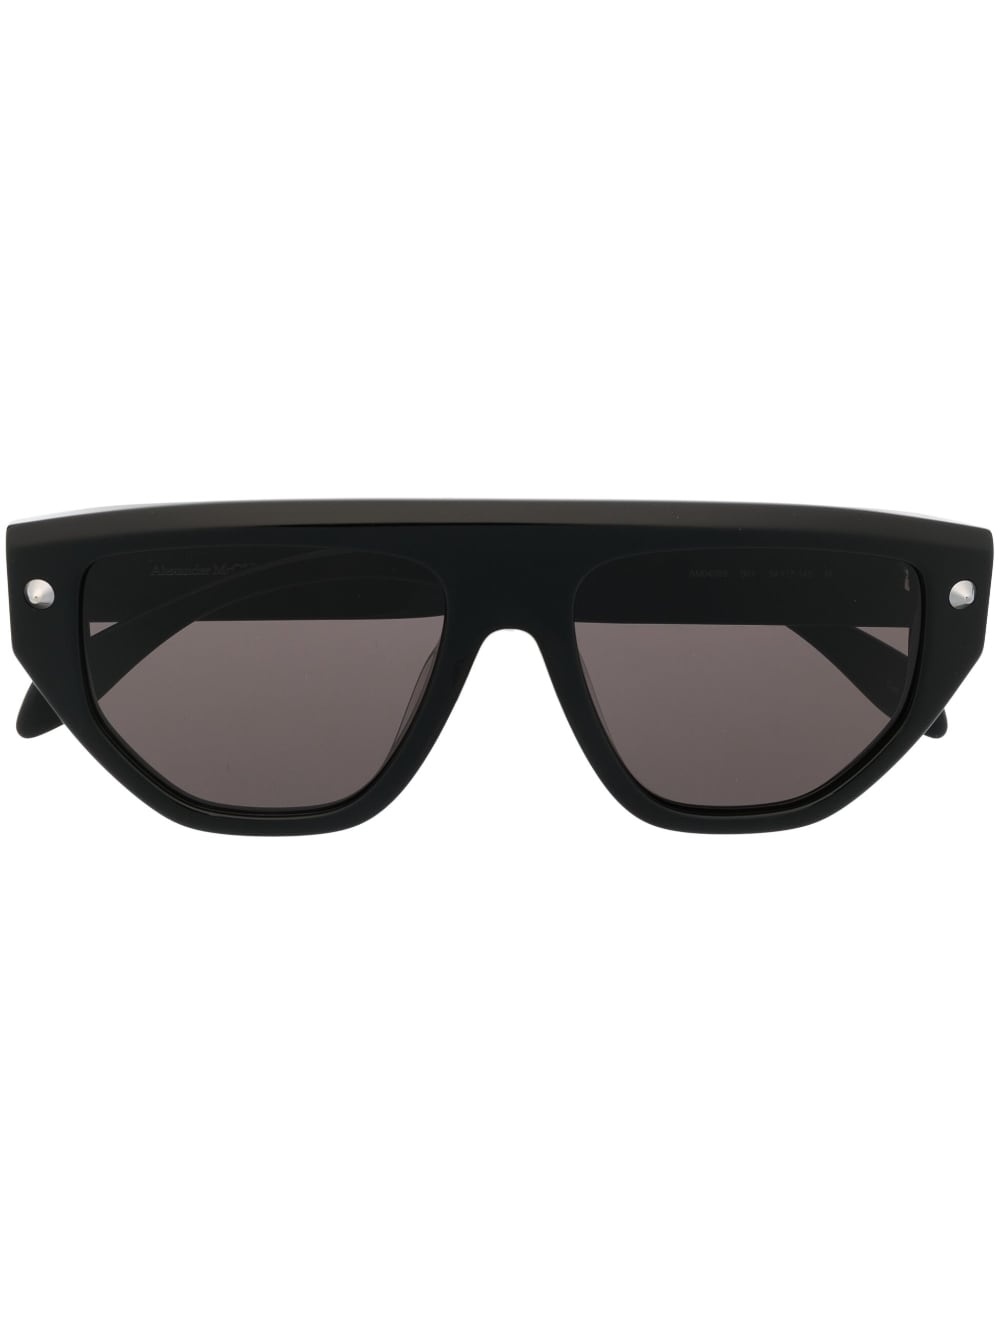 engraved-logo straight-bridge sunglasses - 1